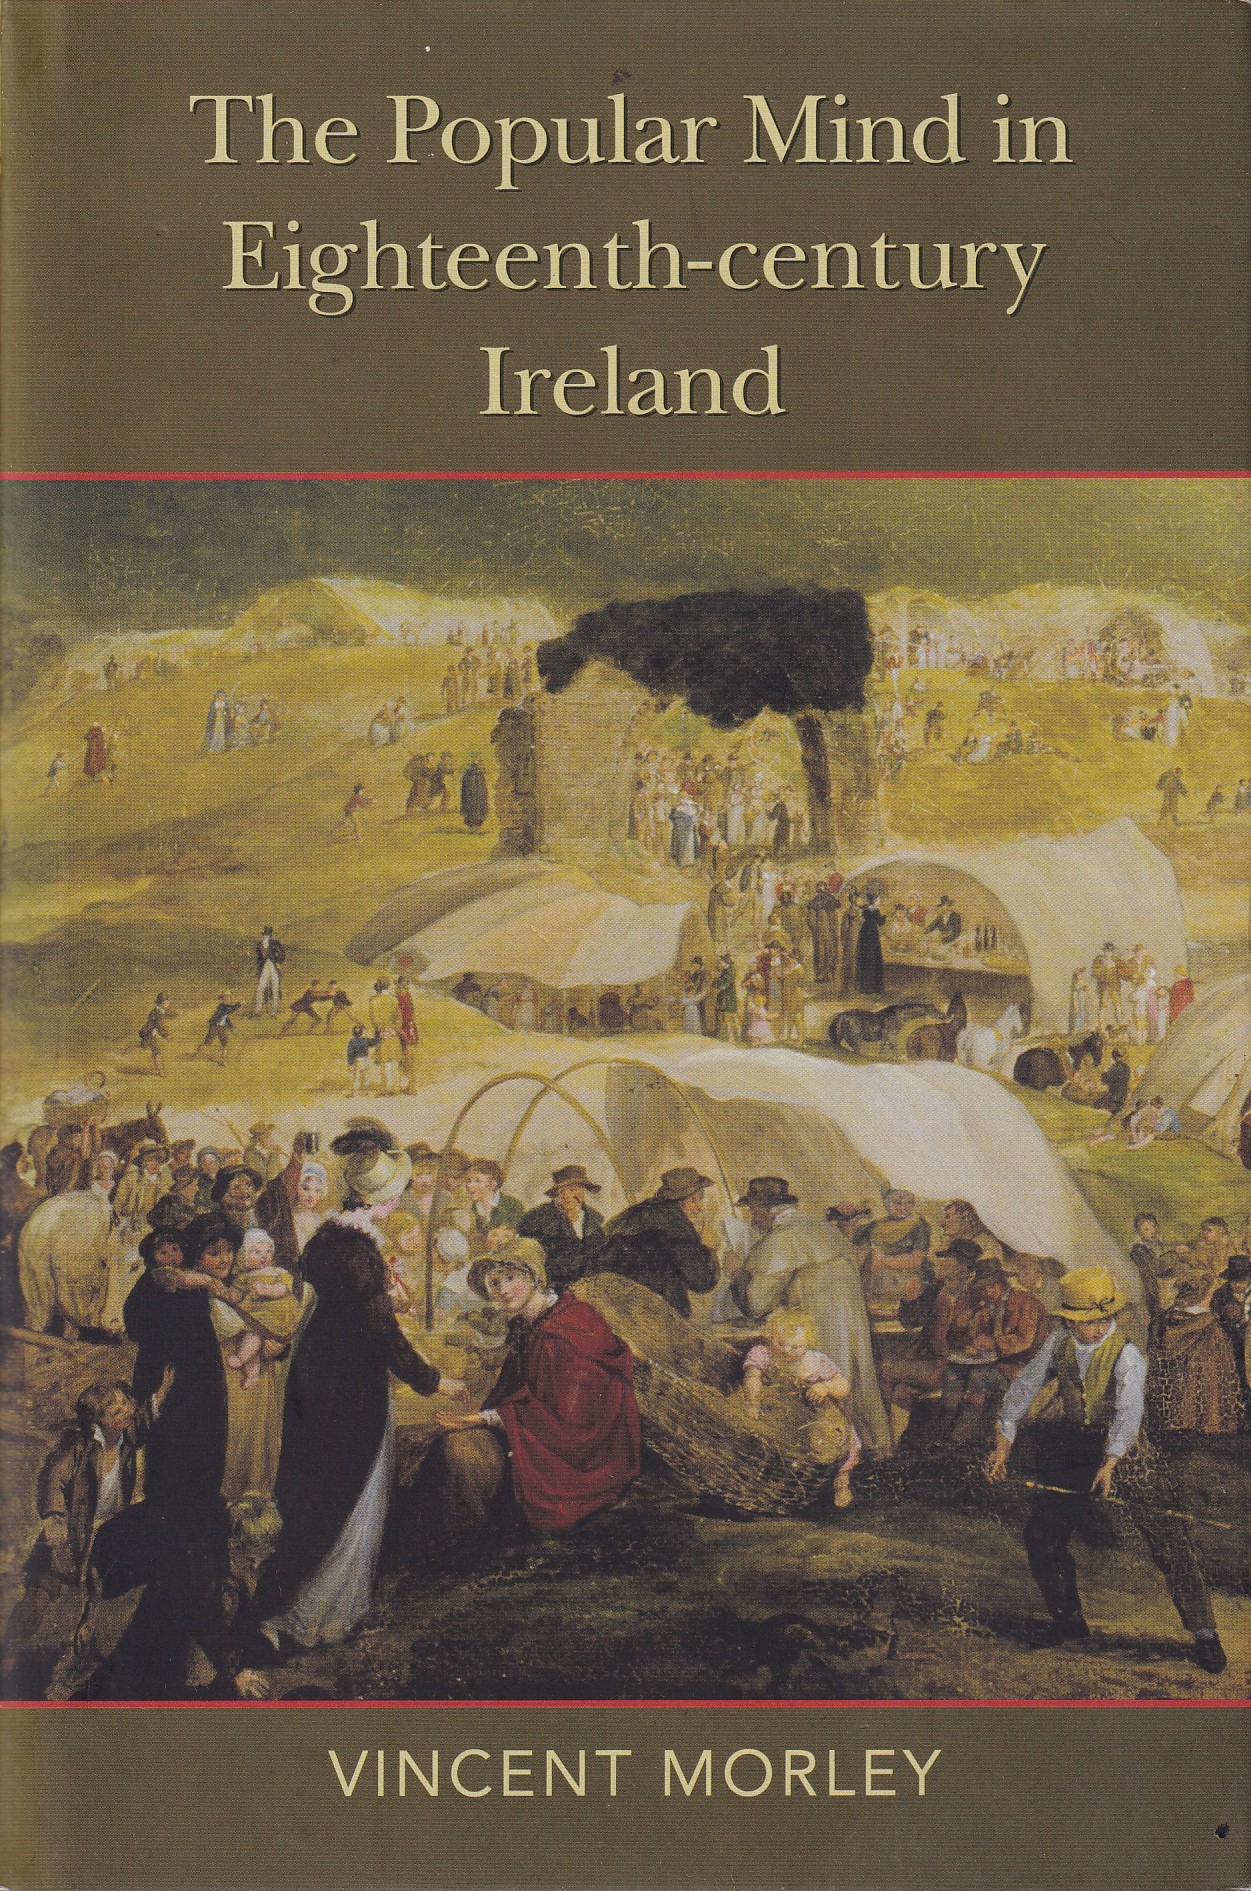 The Popular Mind in Eighteenth-century Ireland by Vincent Morley